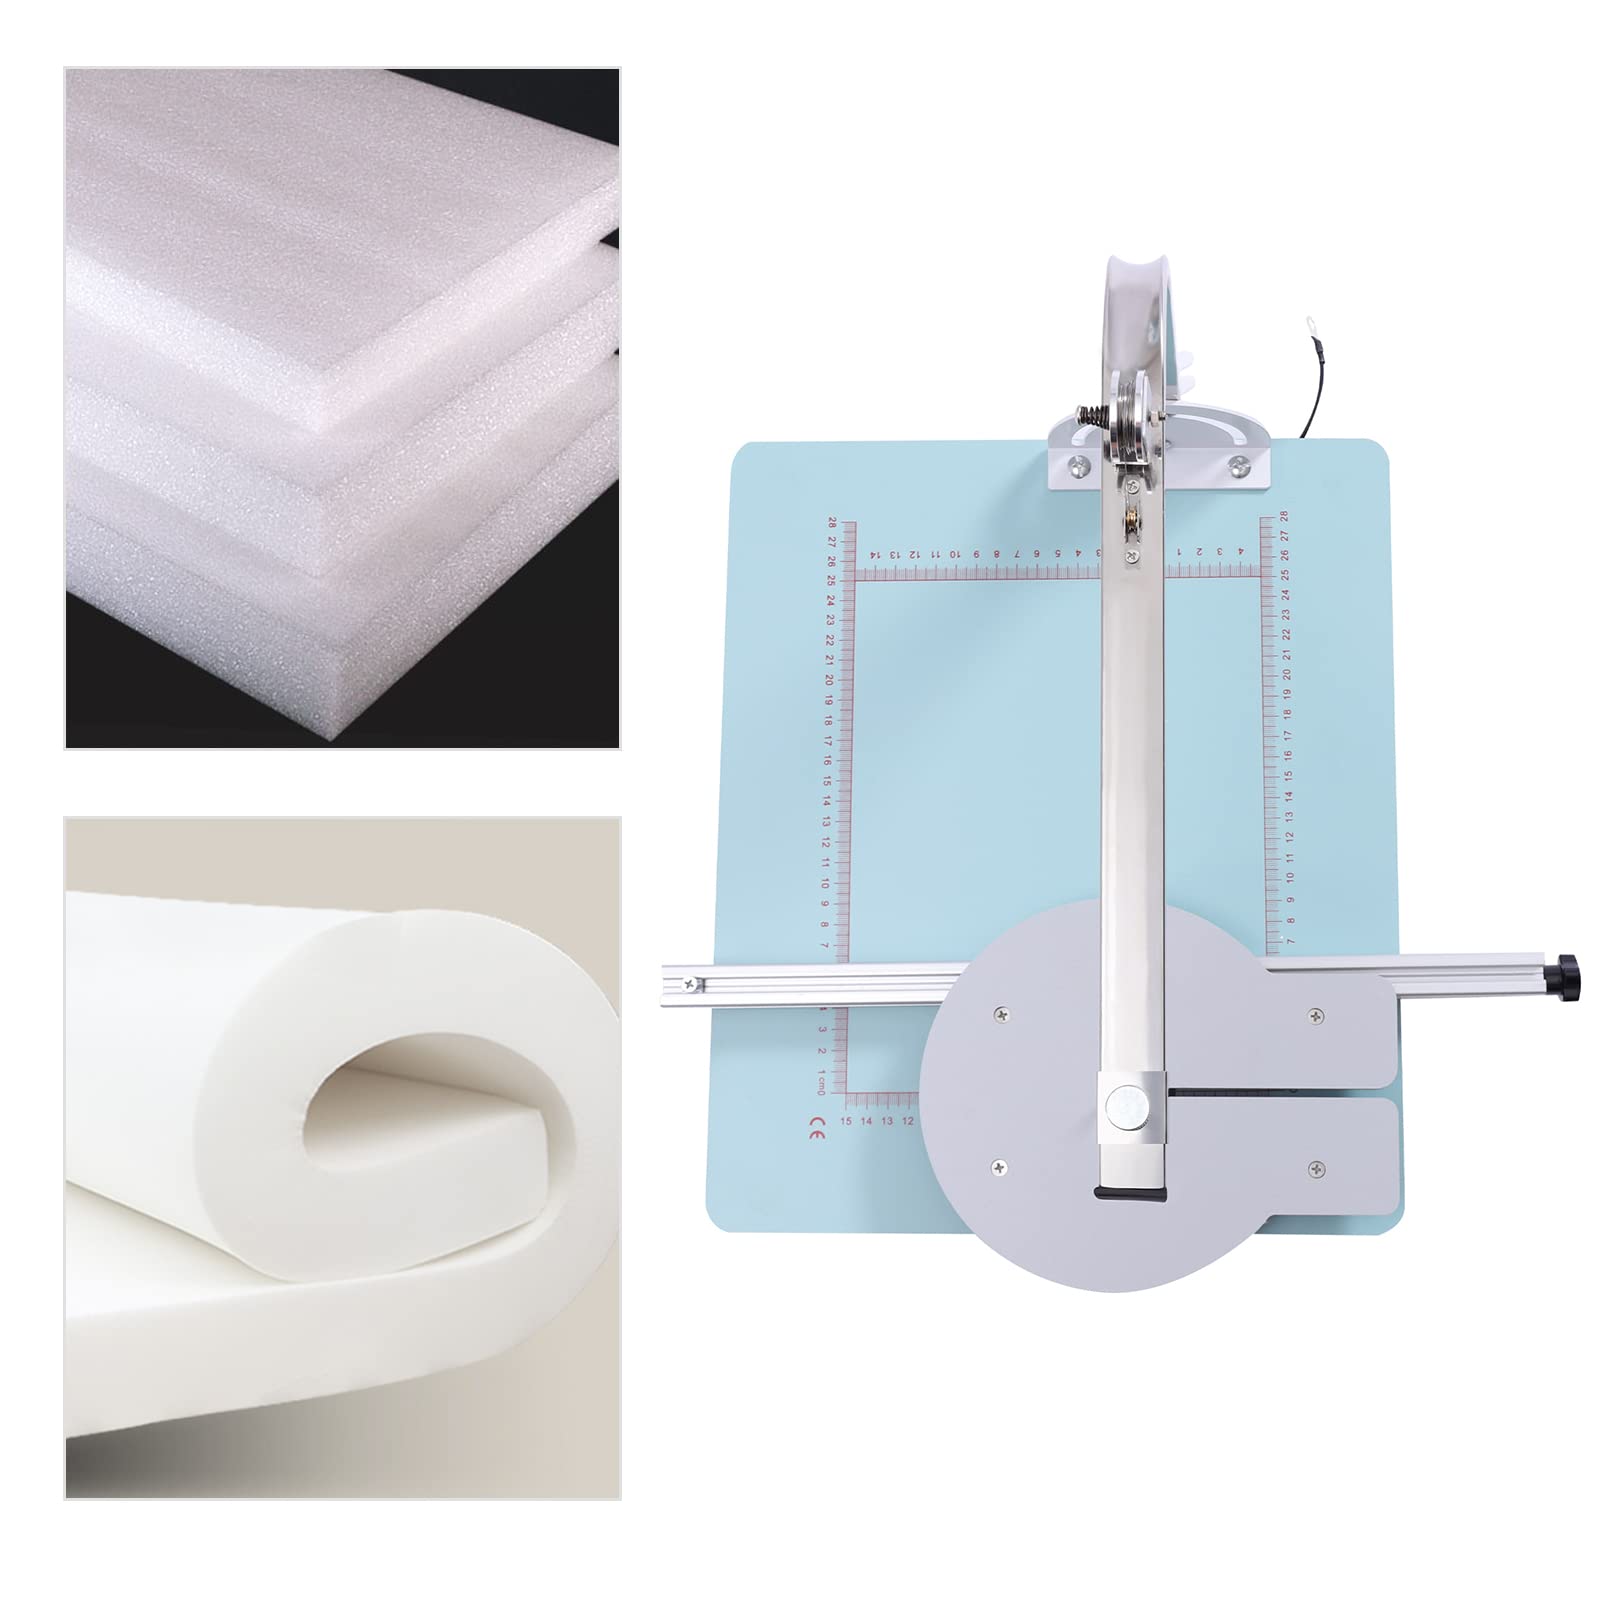 Tabletop Hot Wire Foam Cutter for Foam Sponge Portable Lightweight Hot Wire Foam Cutting Machine Styrofoam Cutter